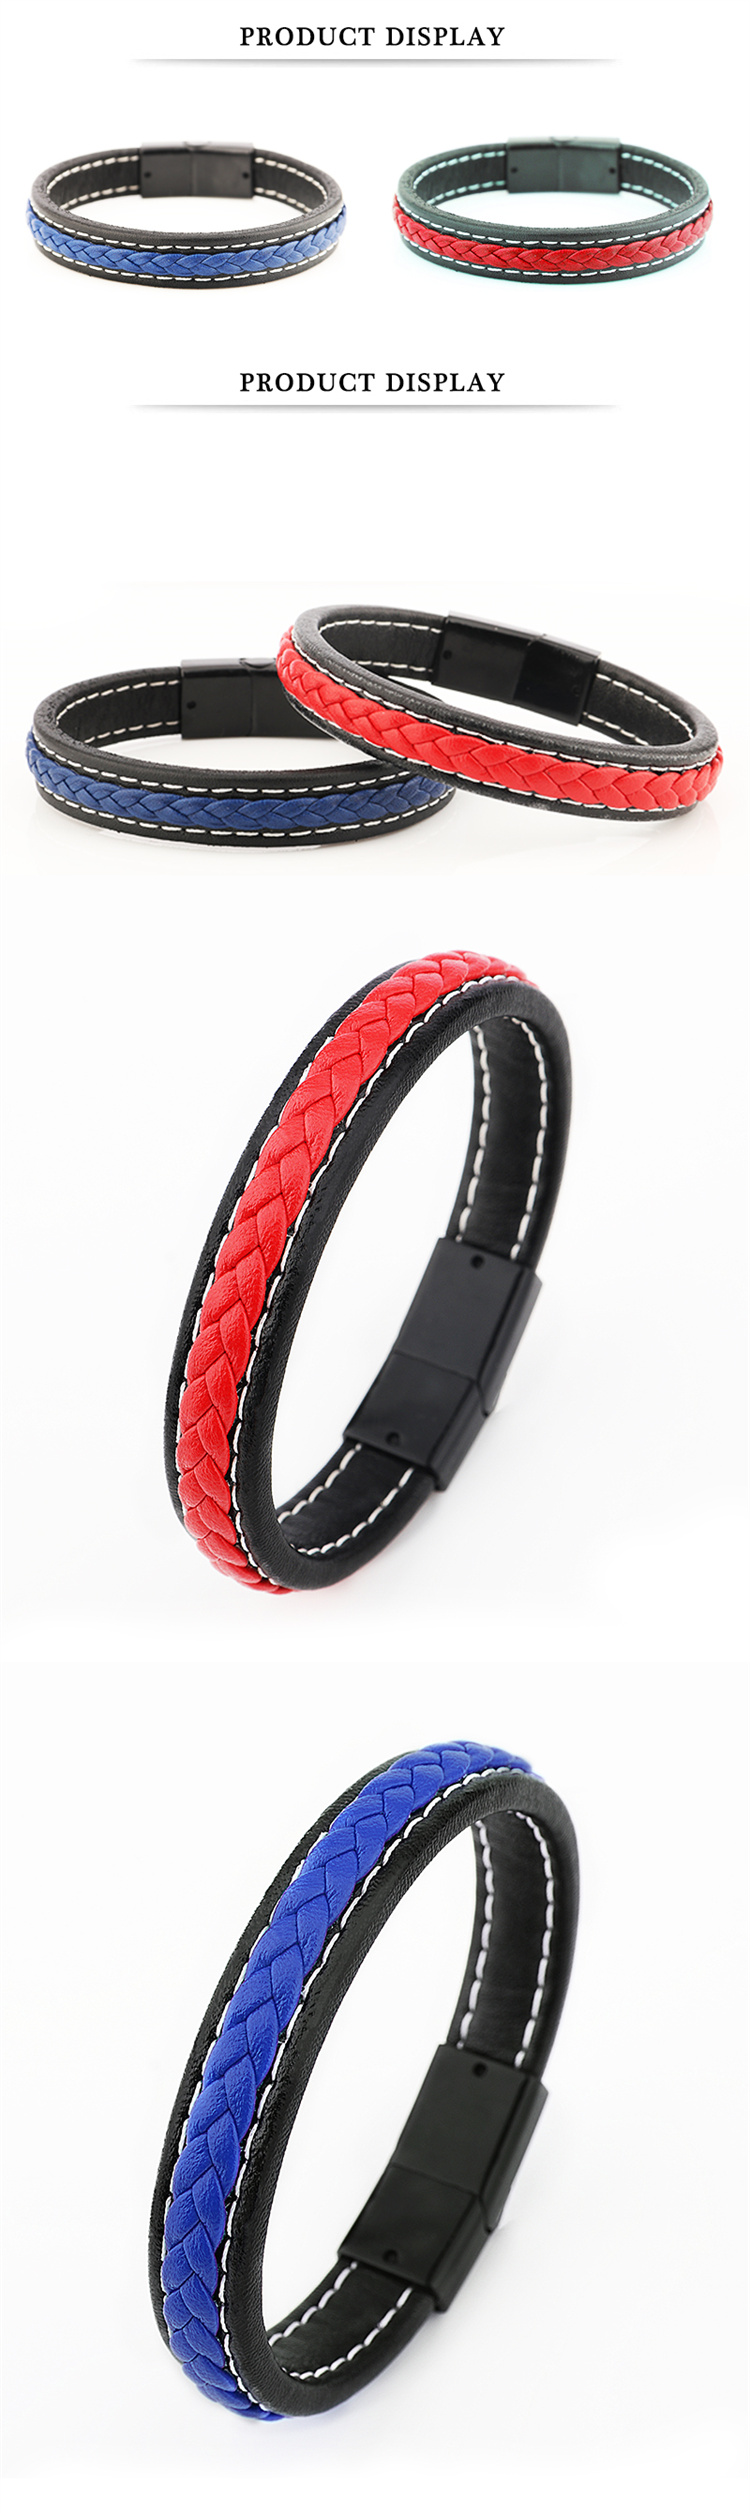 Trendy Jewelry Black Red Braid Leather Stainless Steel Men Bracelet Gift Box